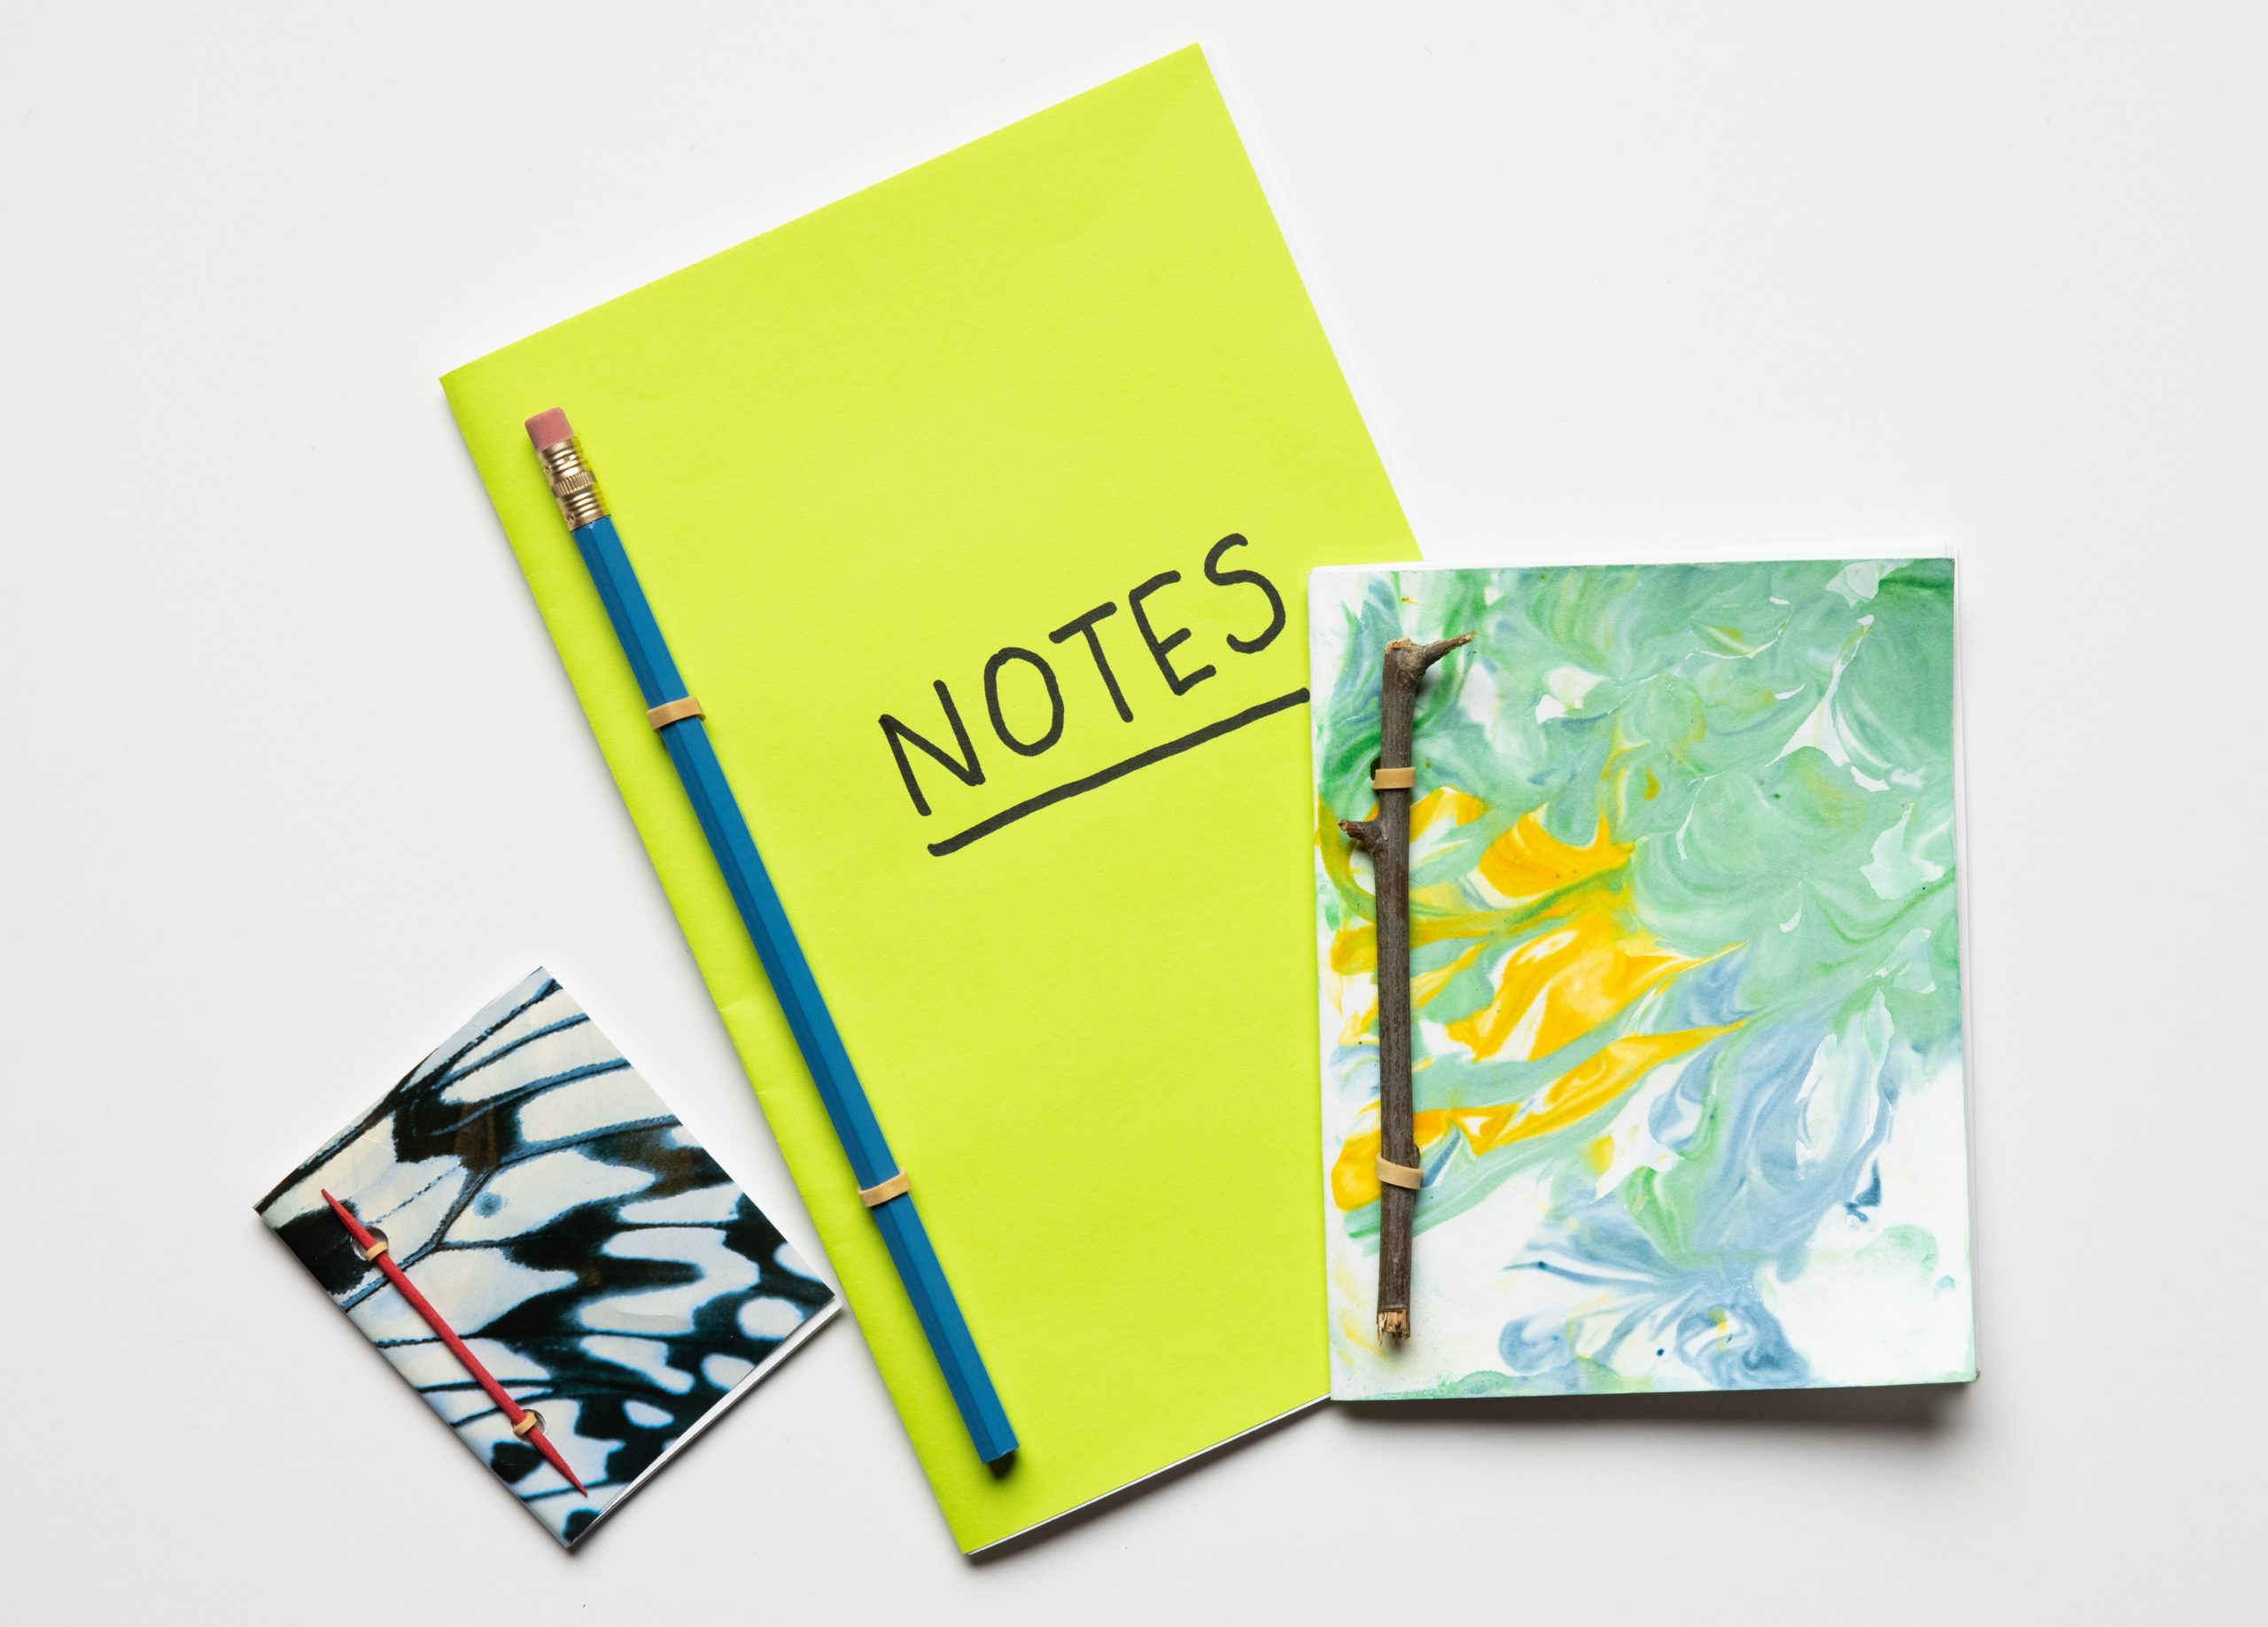 Three handmade notebooks of varying sizes on a white background.